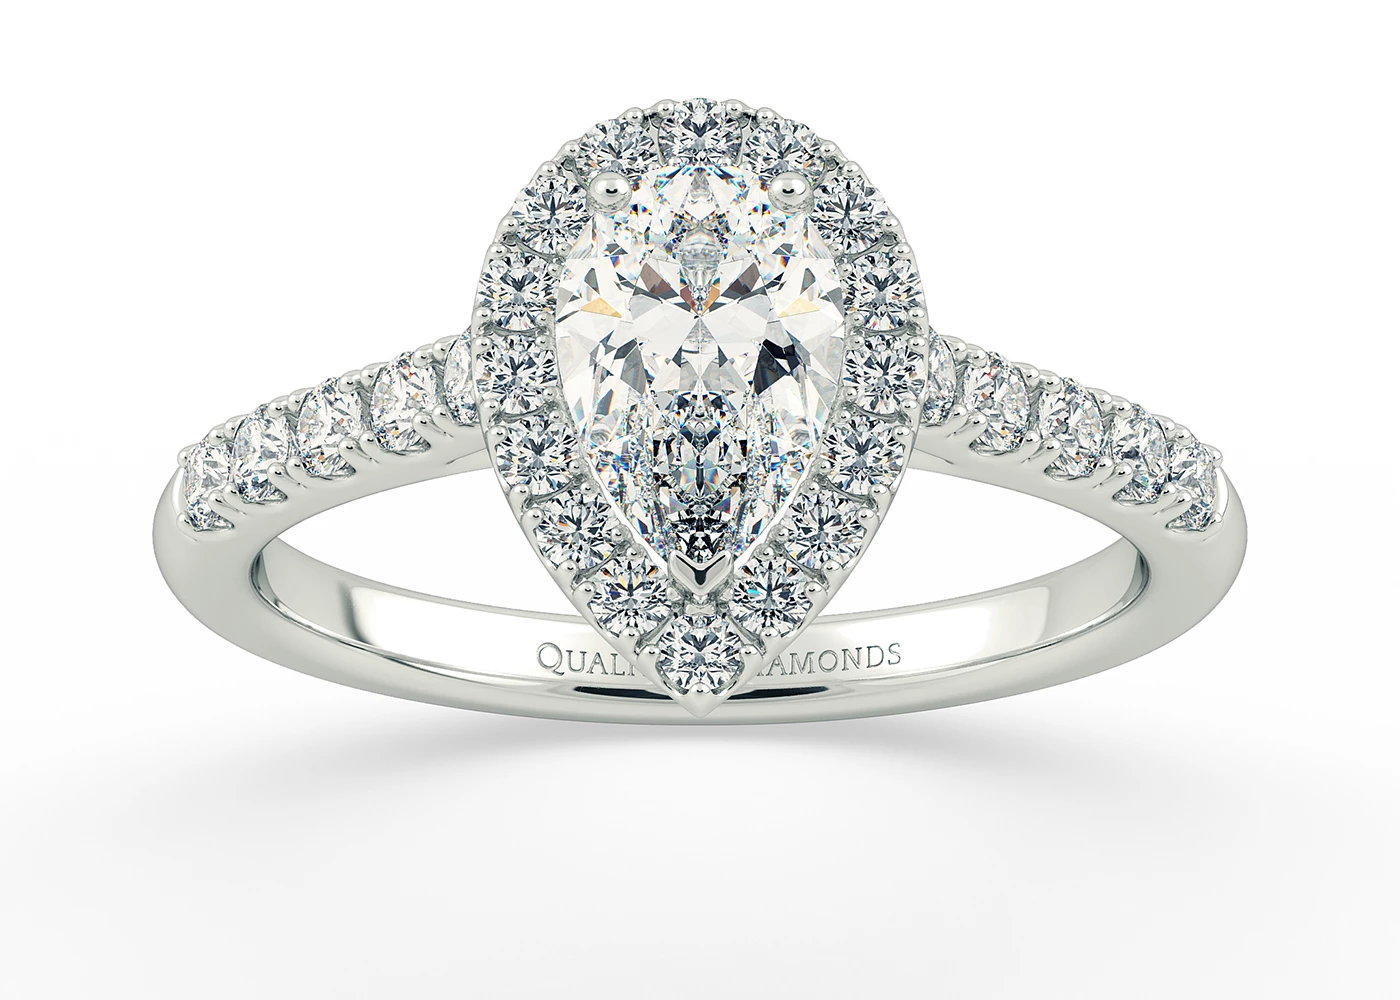 One Carat Pear Halo Diamond Ring in Platinum 950